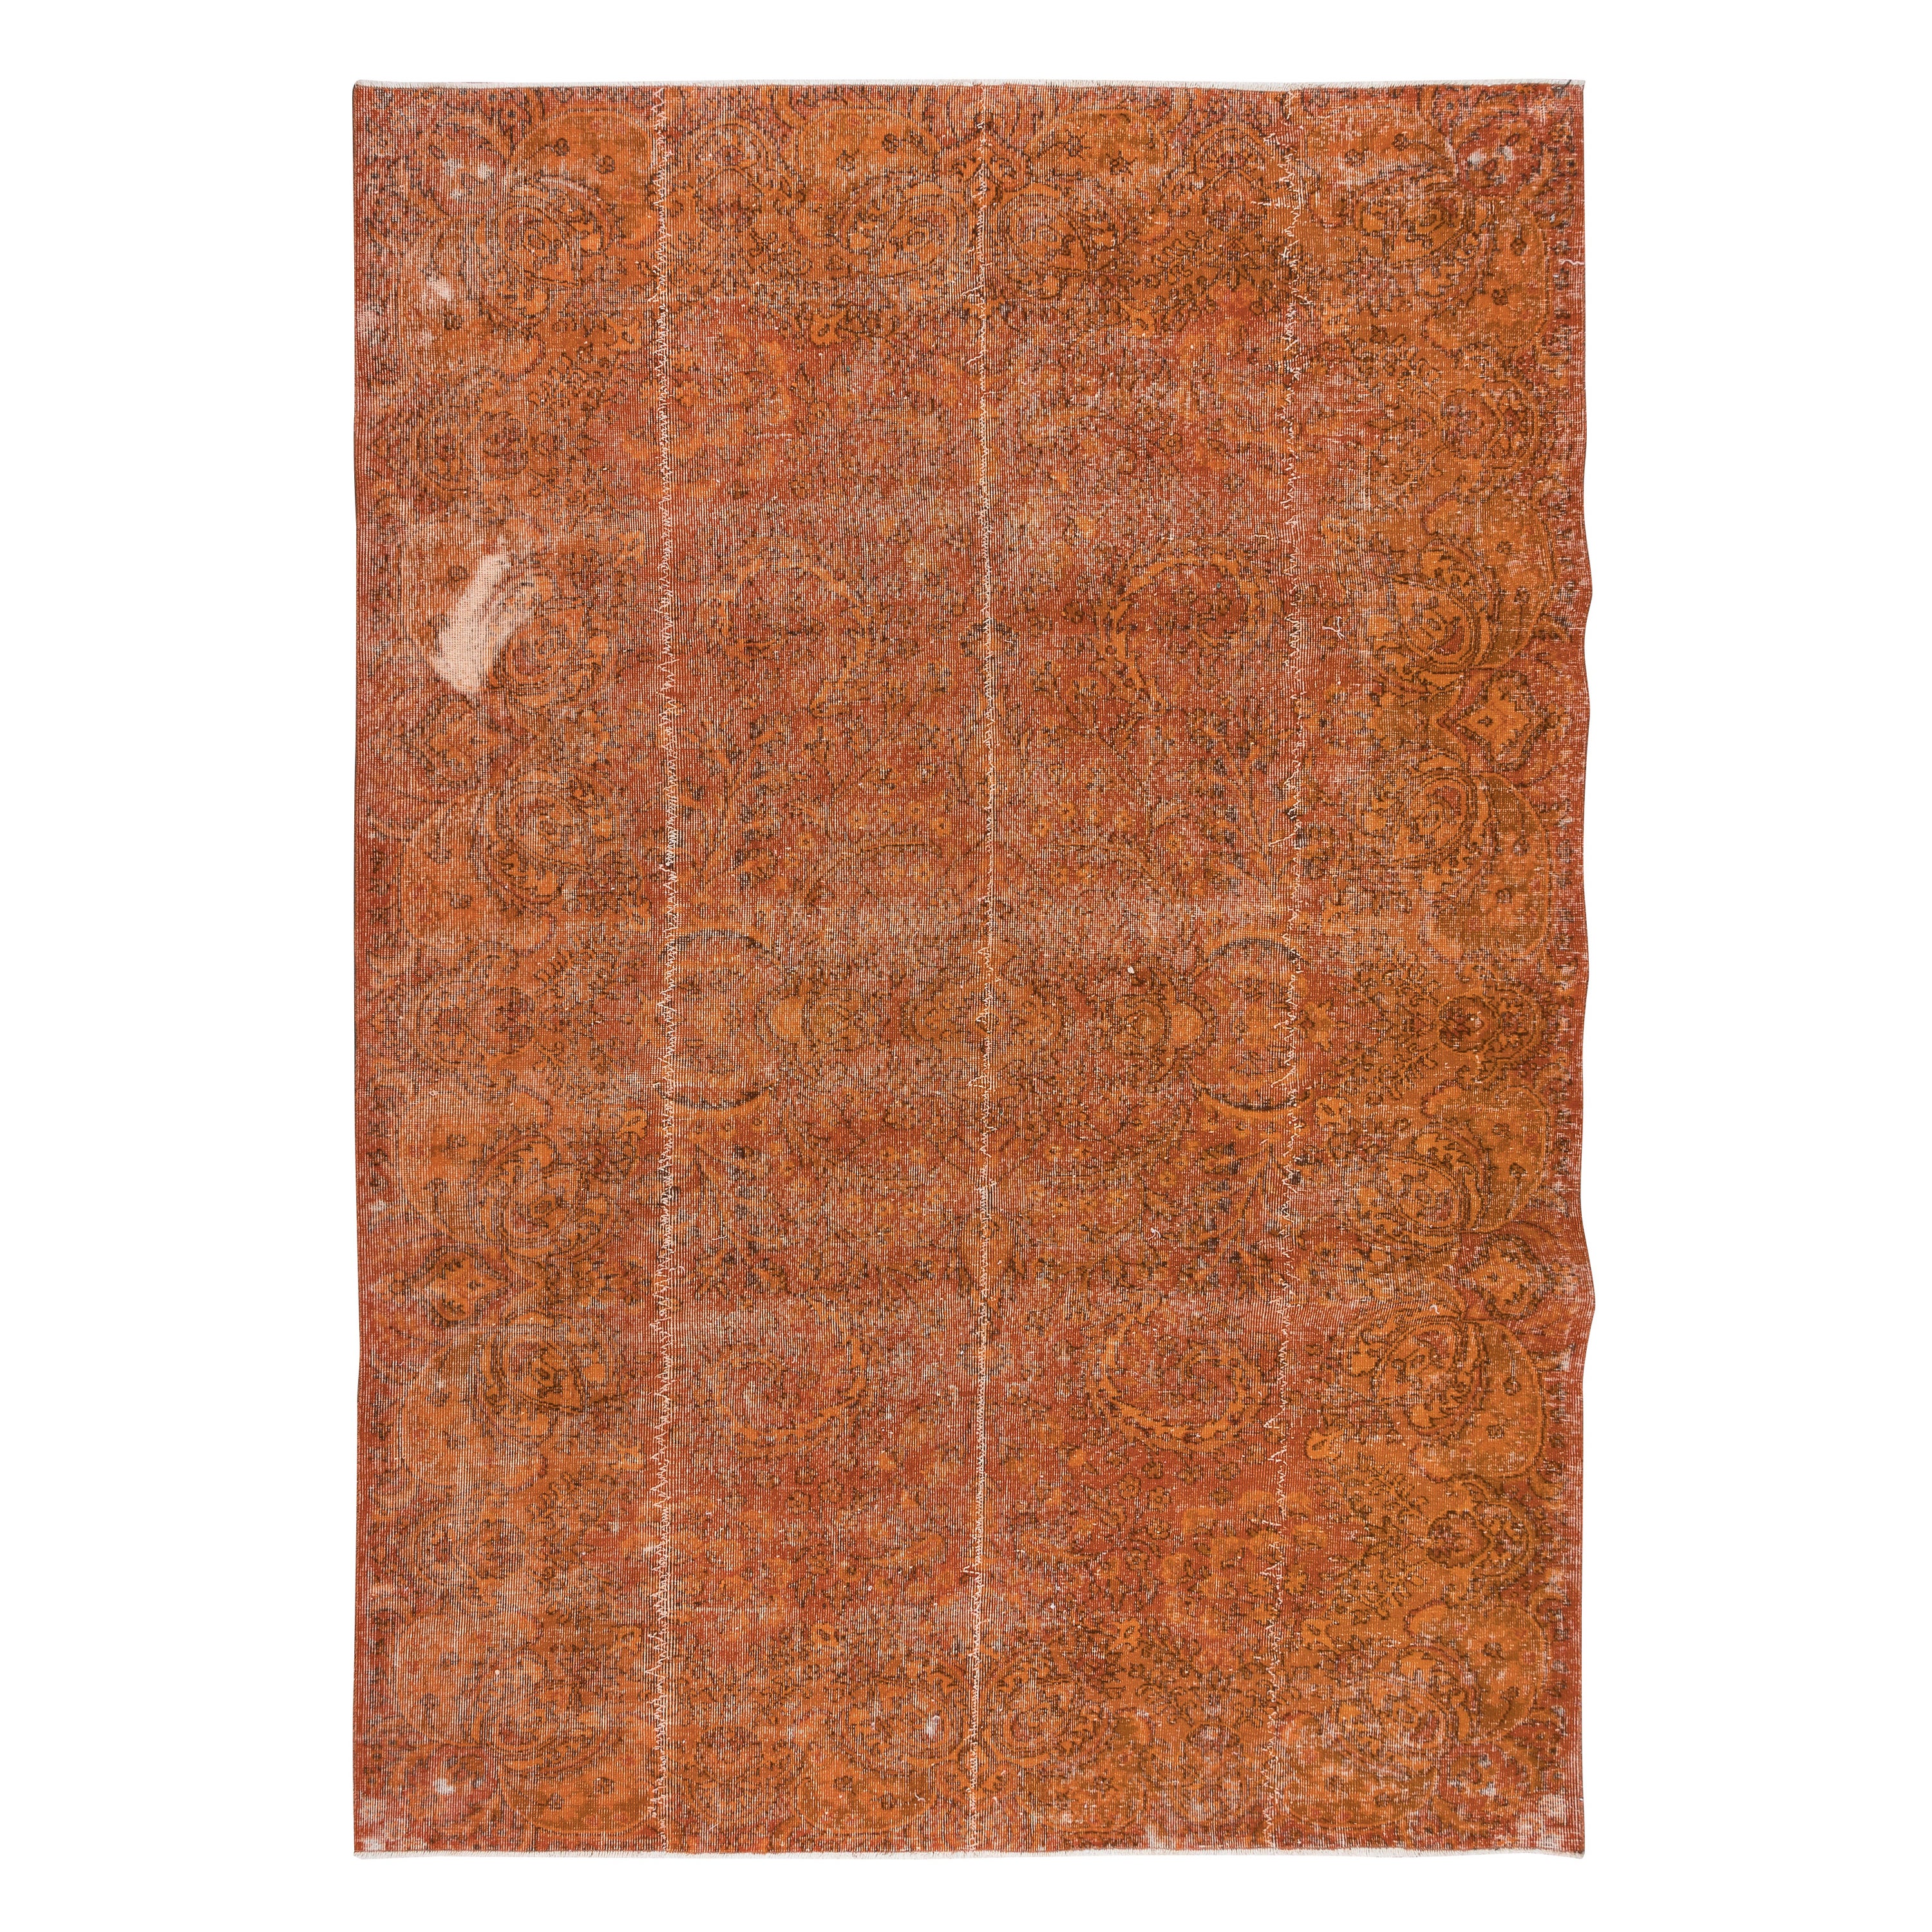 7x10 Ft Orange Handmade Area Rug, Modernity Central Anatolian Wool Carpet (tapis de laine d'Anatolie centrale) en vente